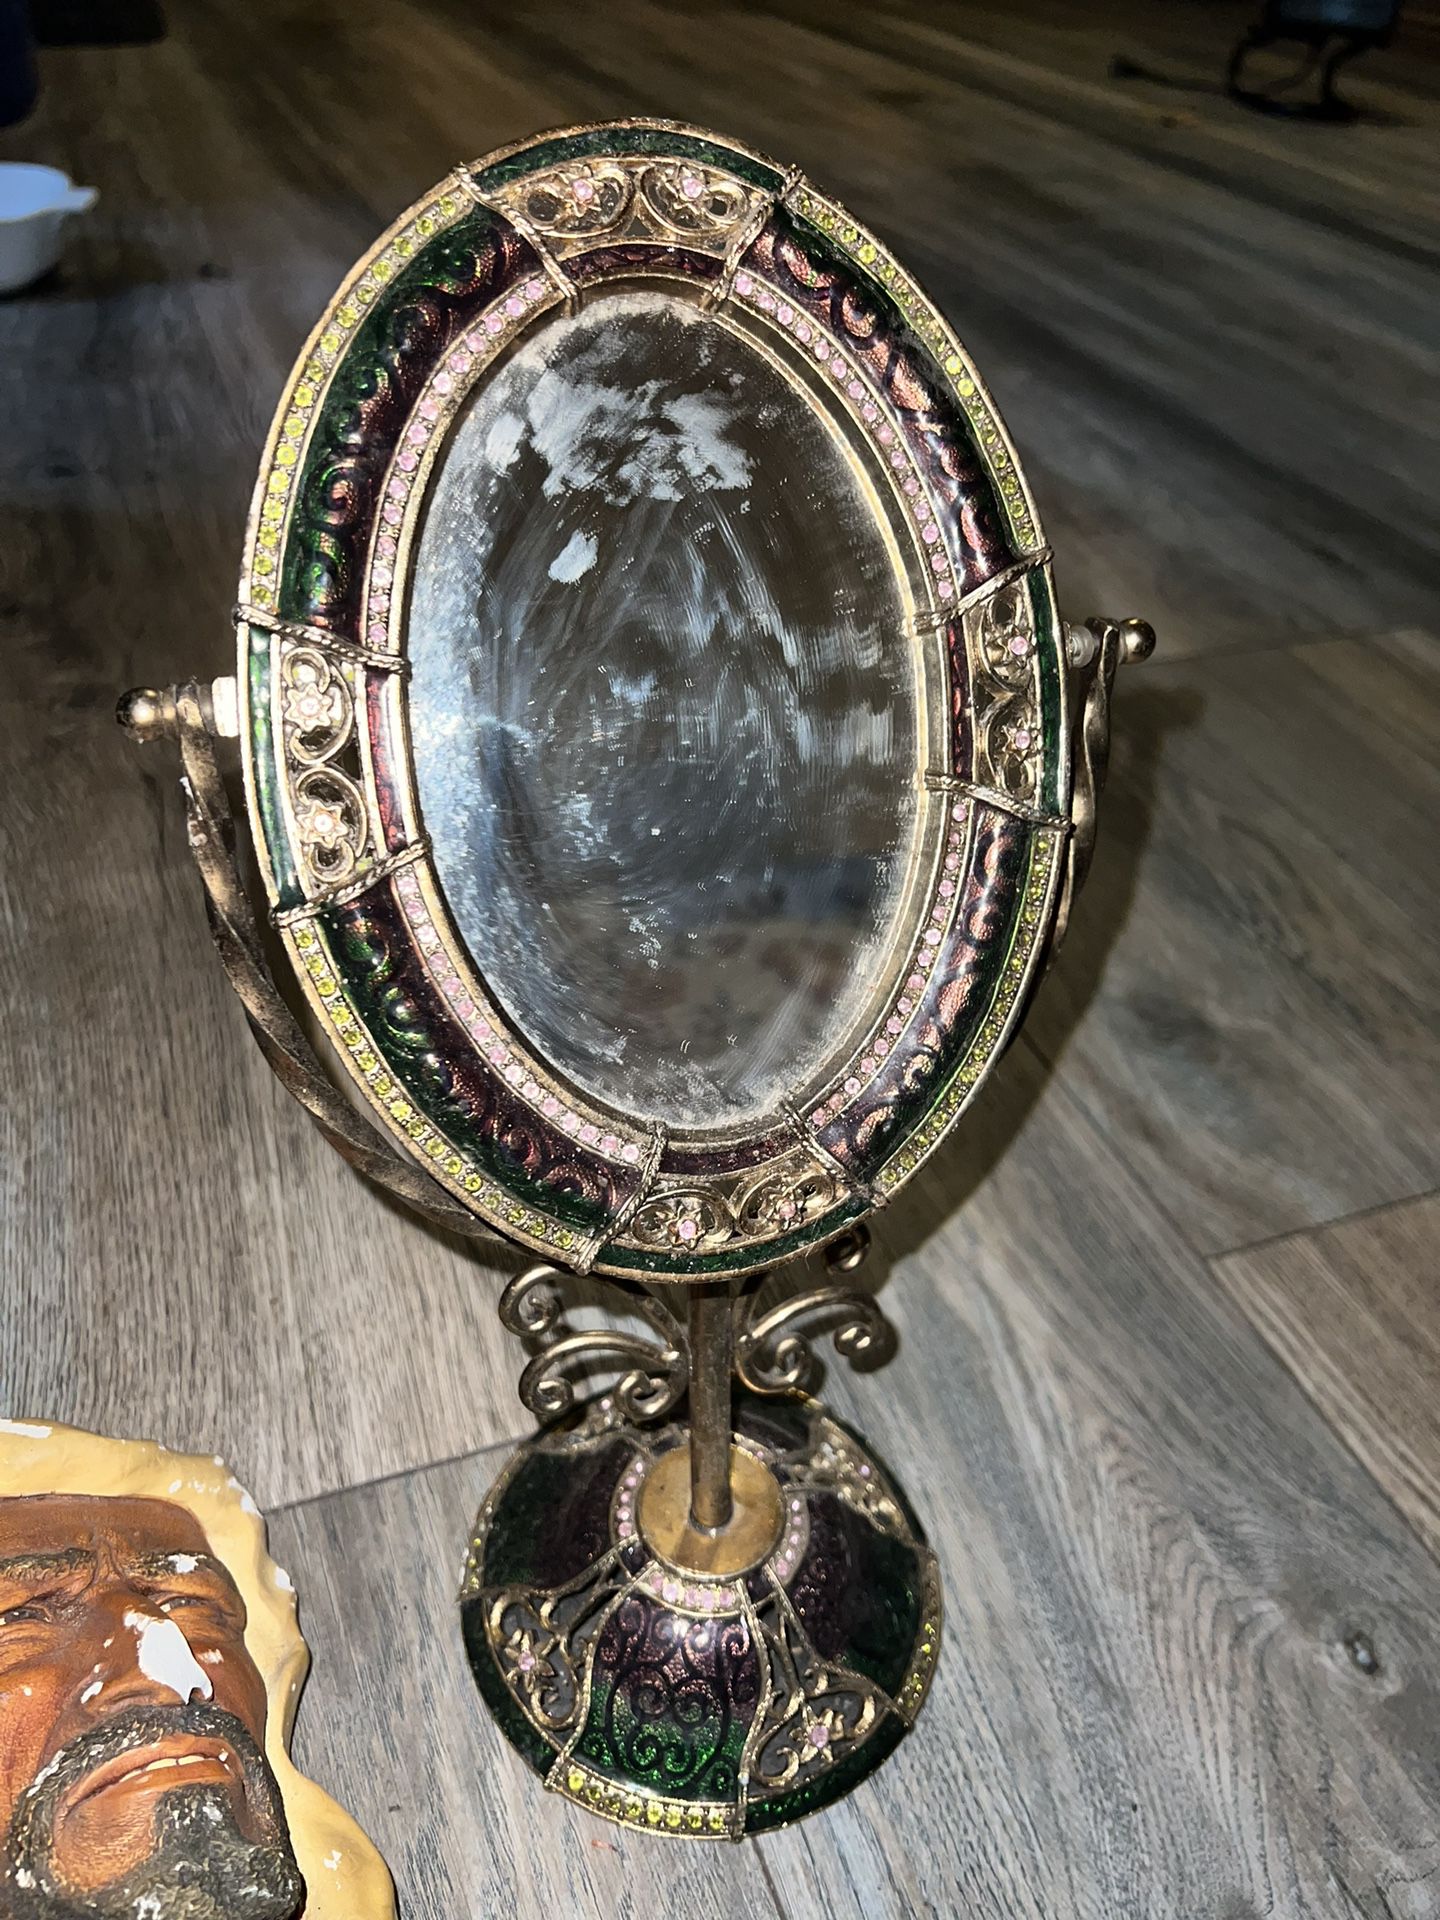 Small Antique Mirror